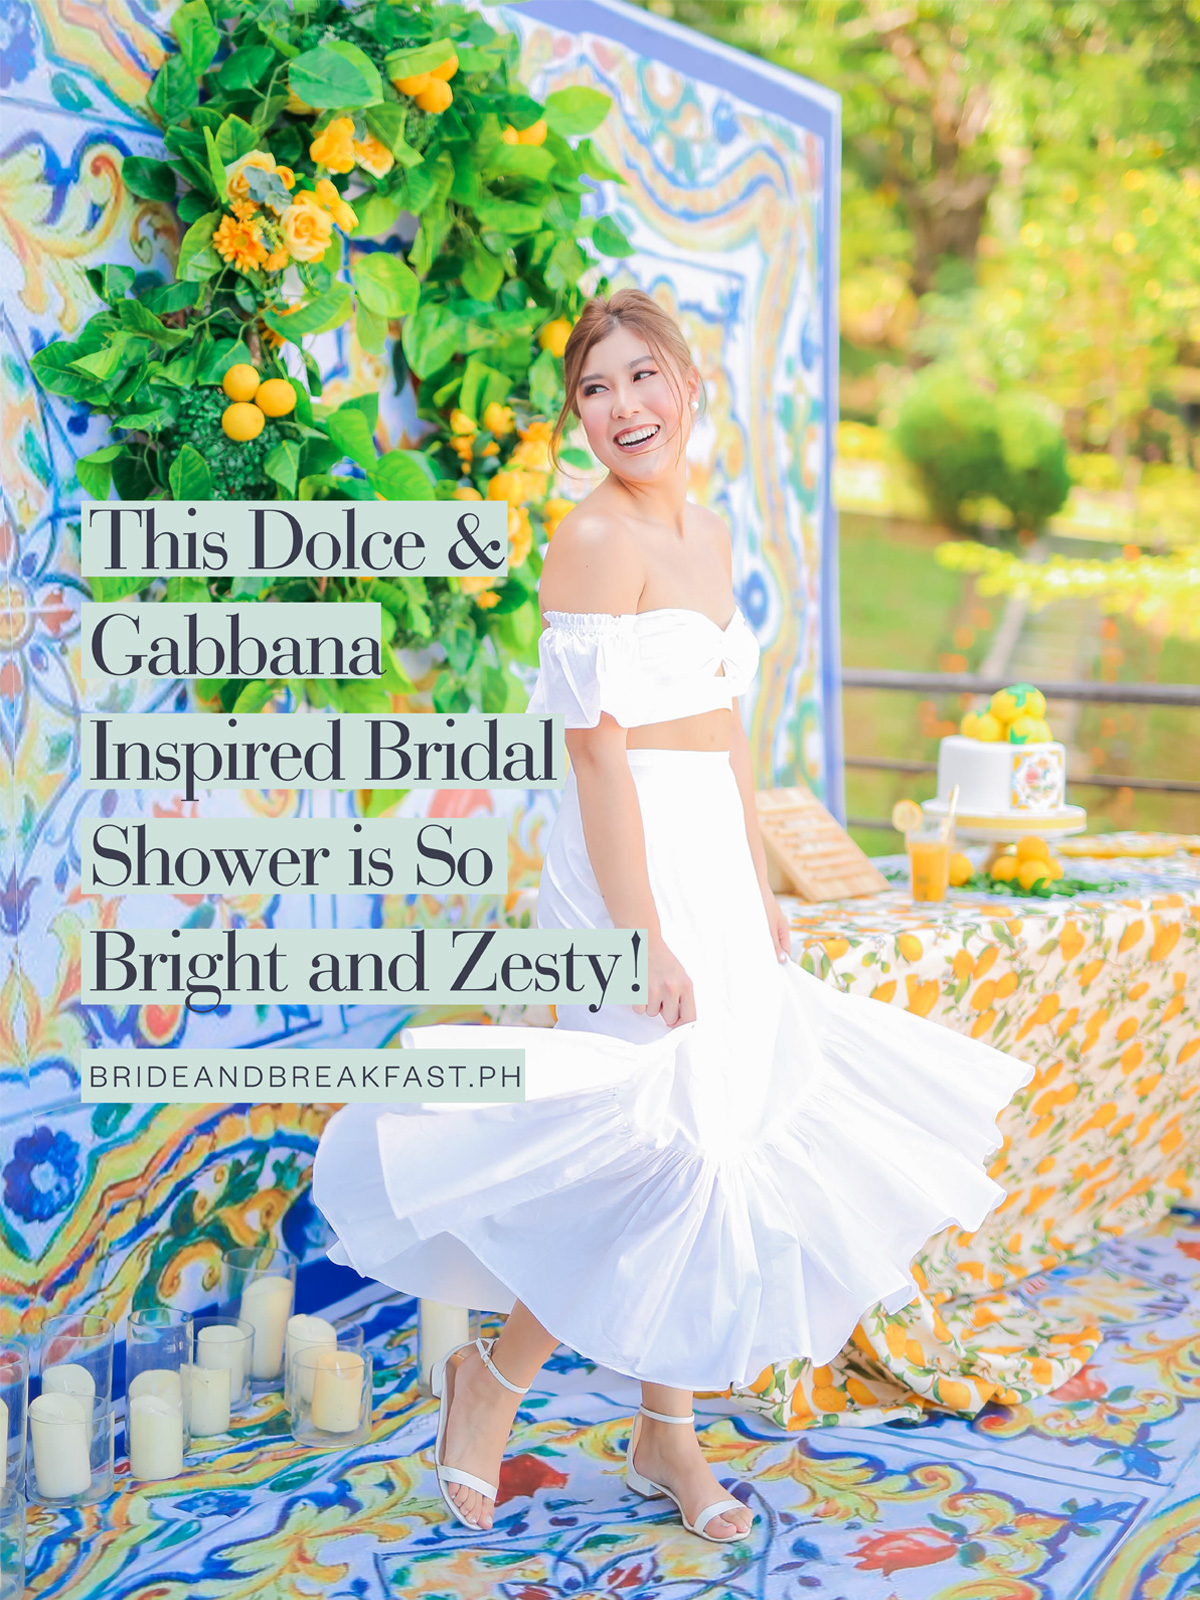 A Fun and Zesty Bridal Shower | Philippines Wedding Blog